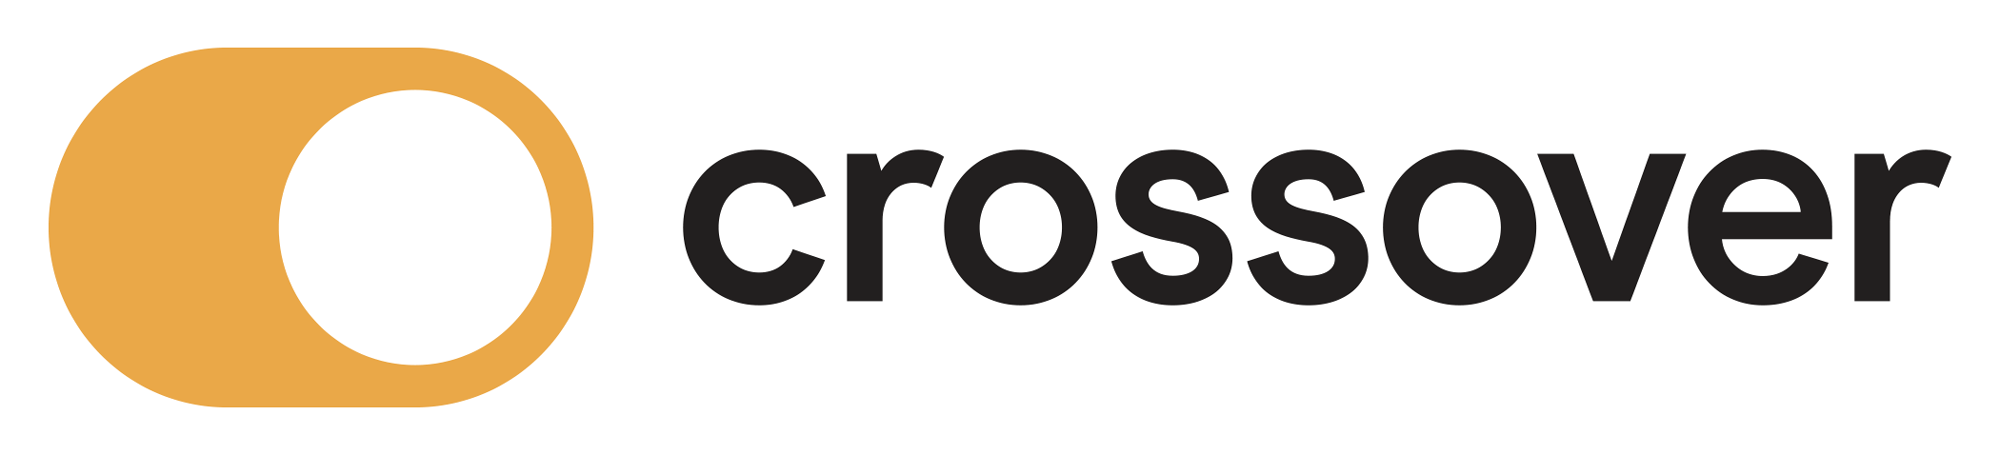 Crossover Health Logo.